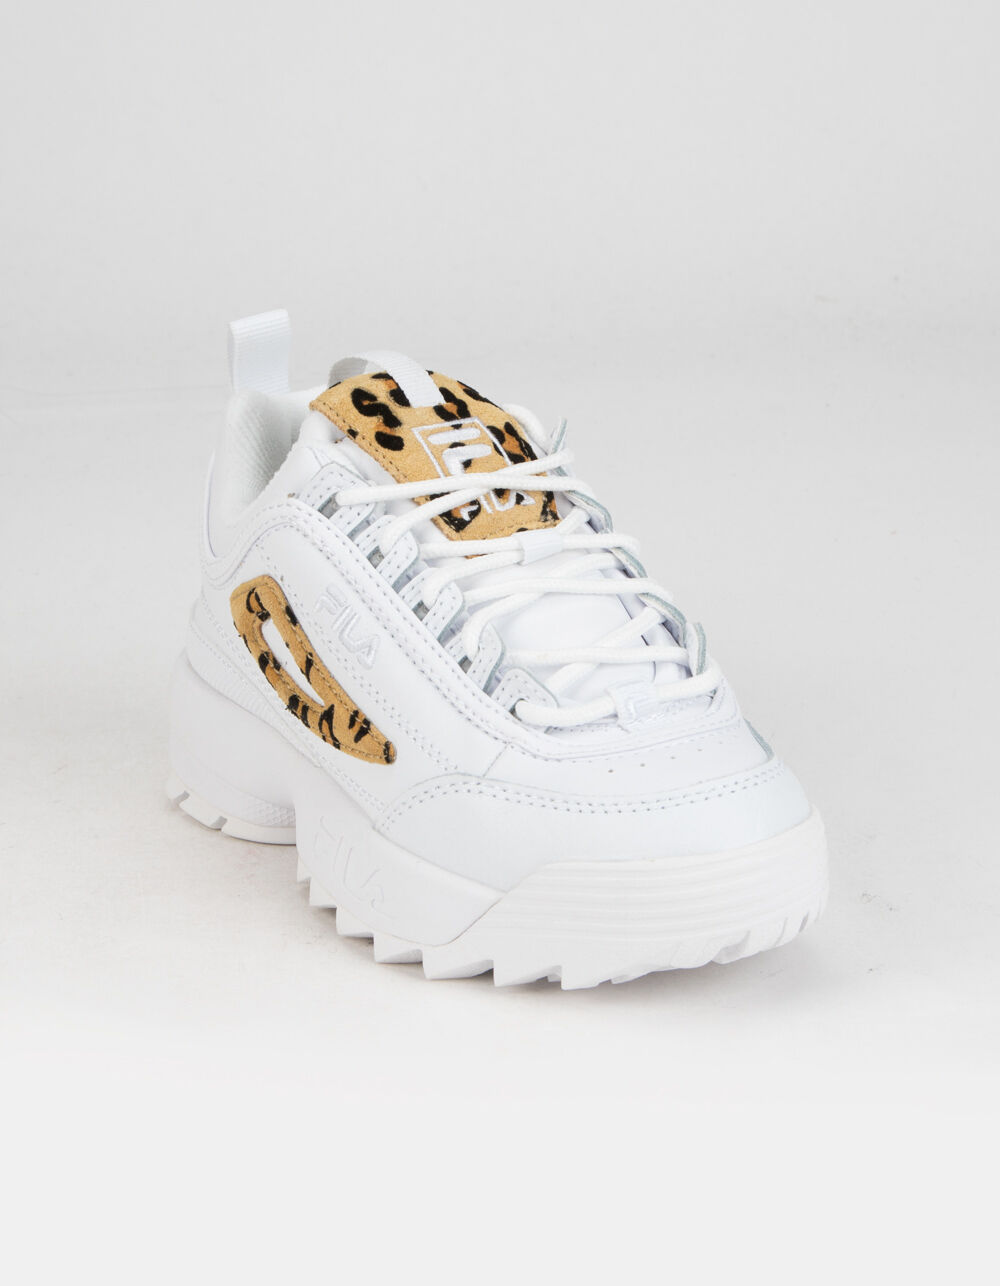 FILA Disruptor II Juniors Leopard Shoes - WHITE | Tillys